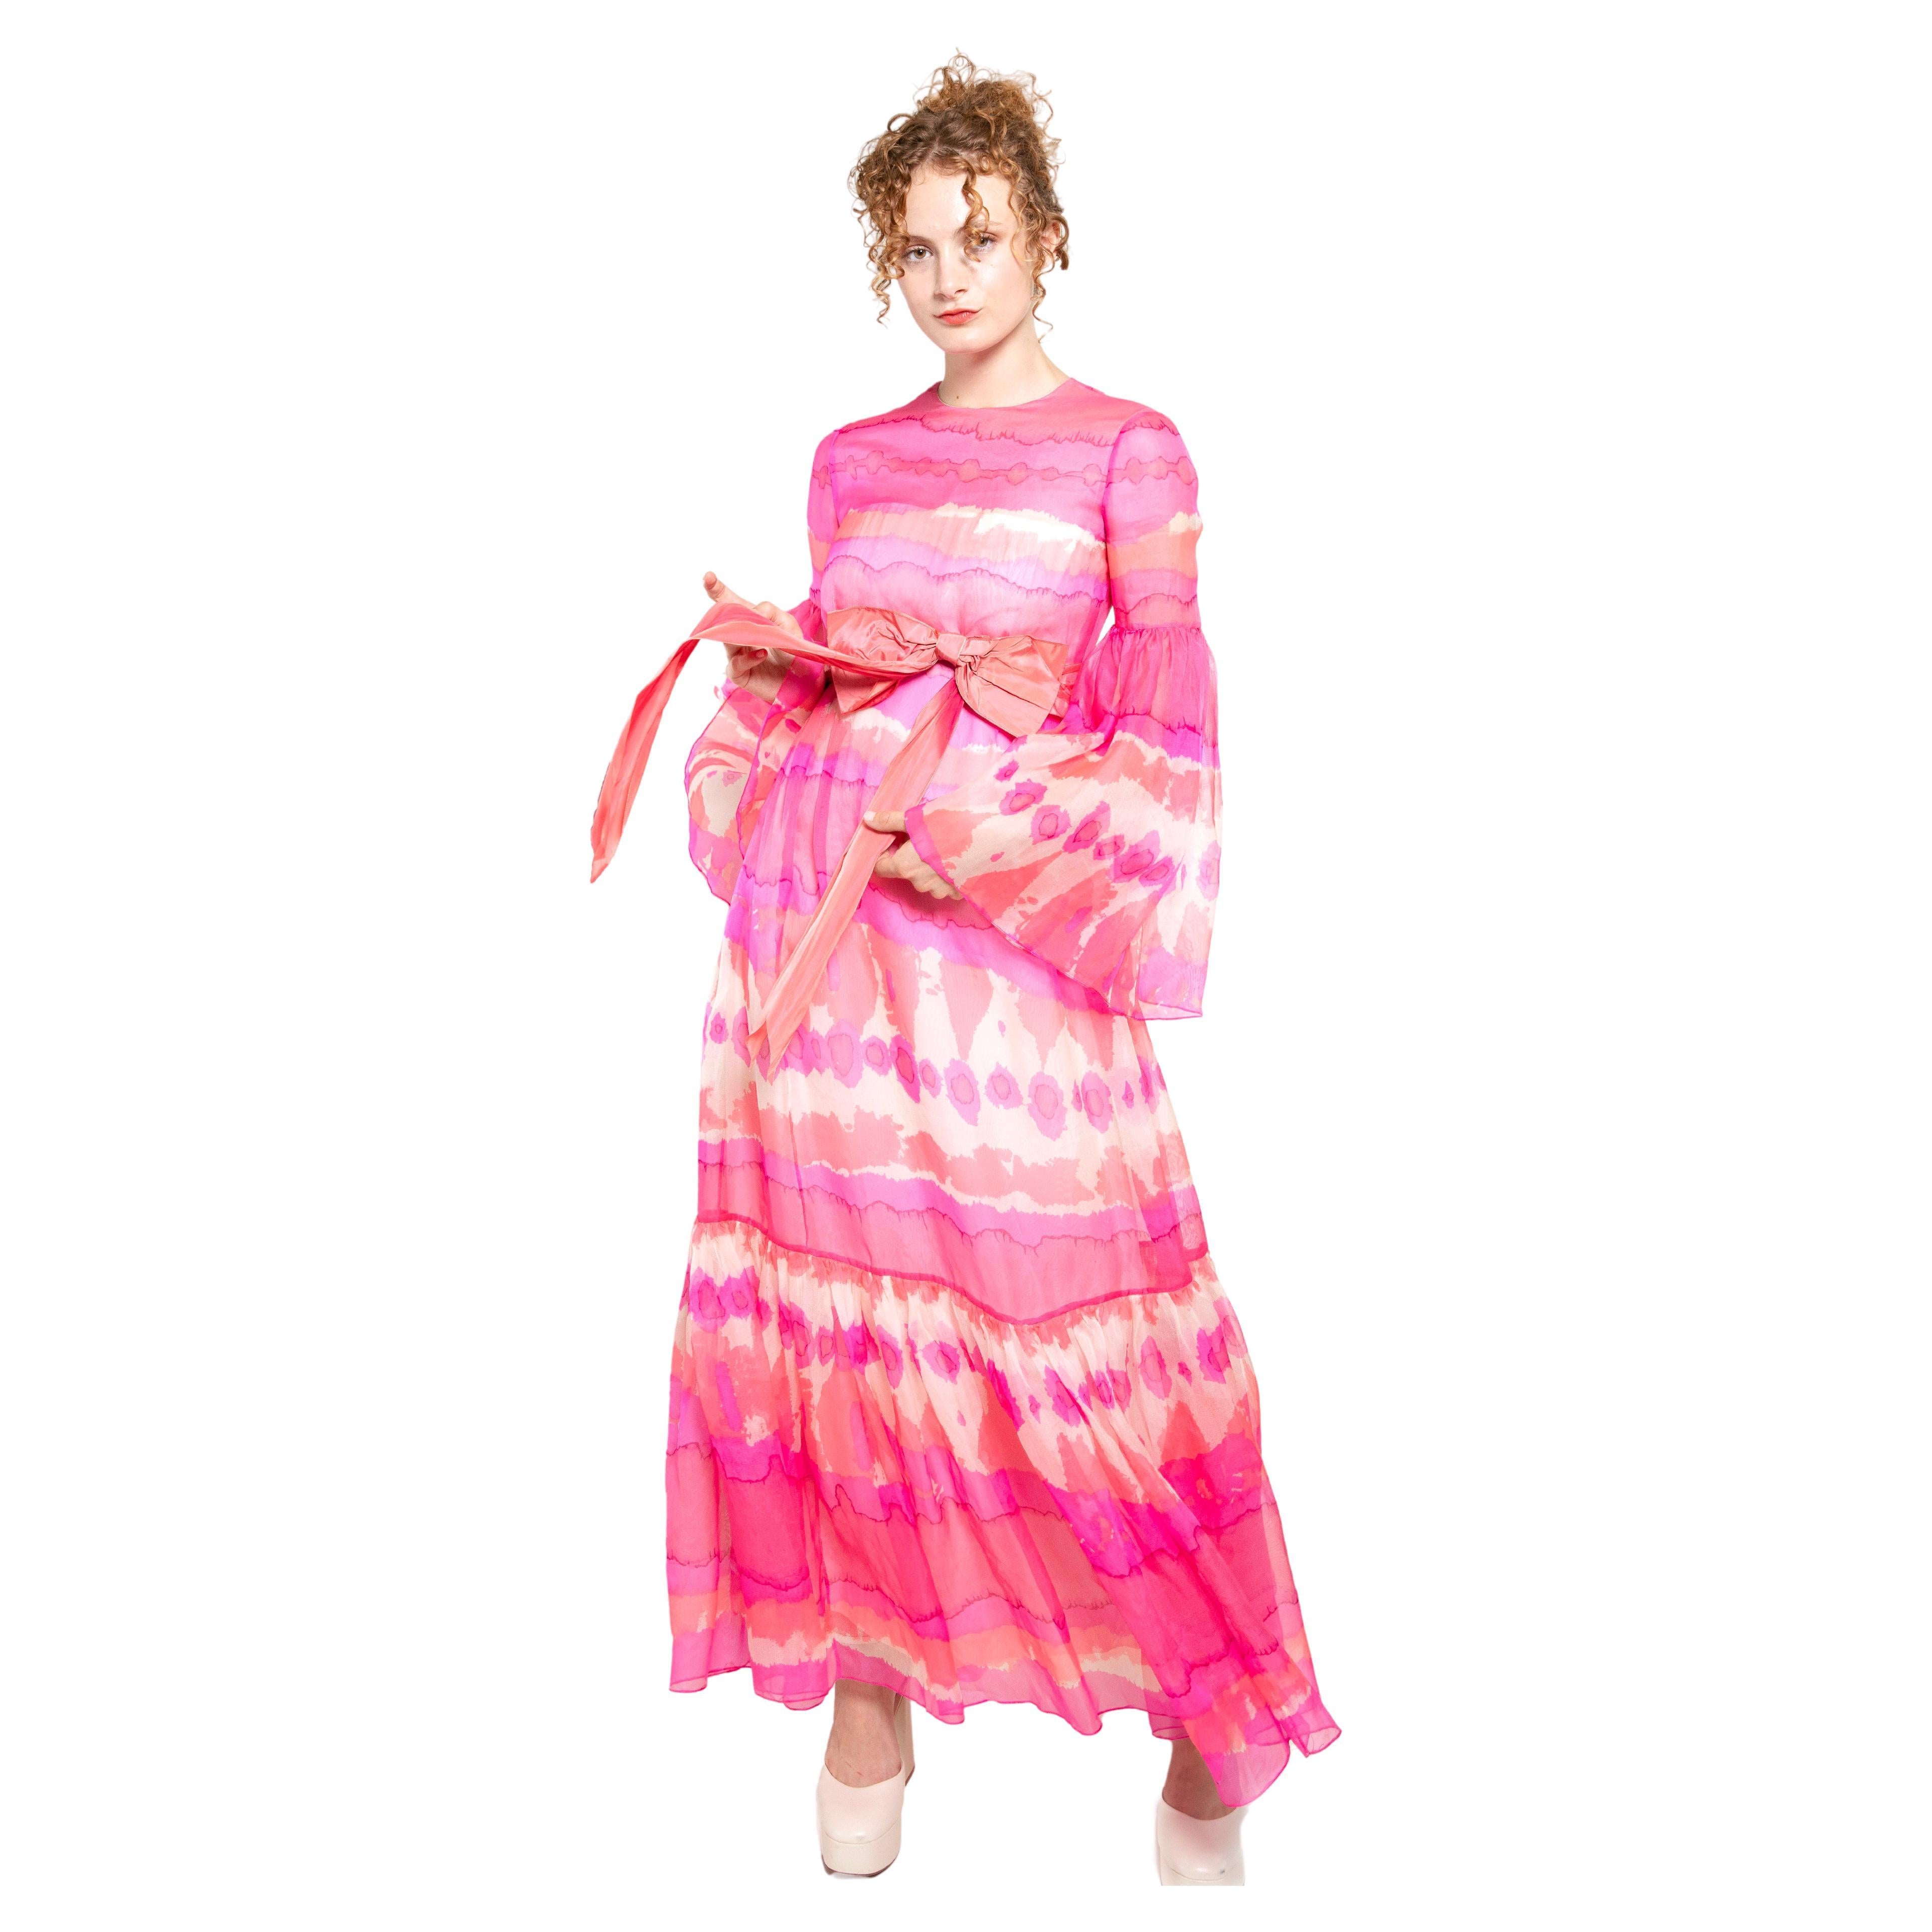 Vintage Malcom Starr Pink Chiffon Bell Sleeve Dress For Sale